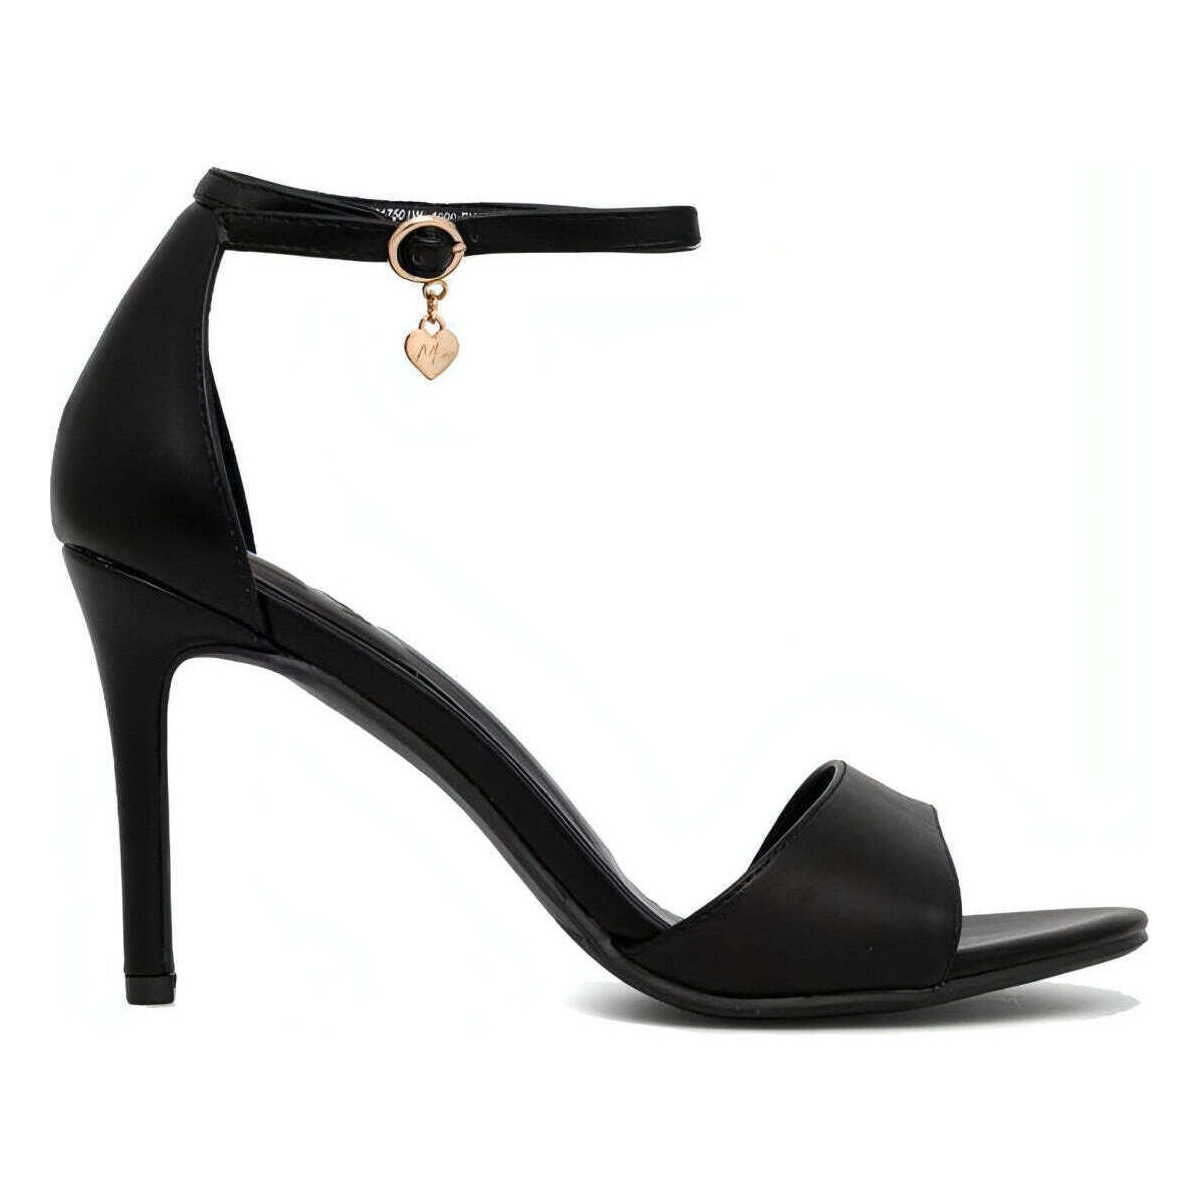 Chaussures Femme Tabitha Simmons Ankle Boots leyla sandals Noir